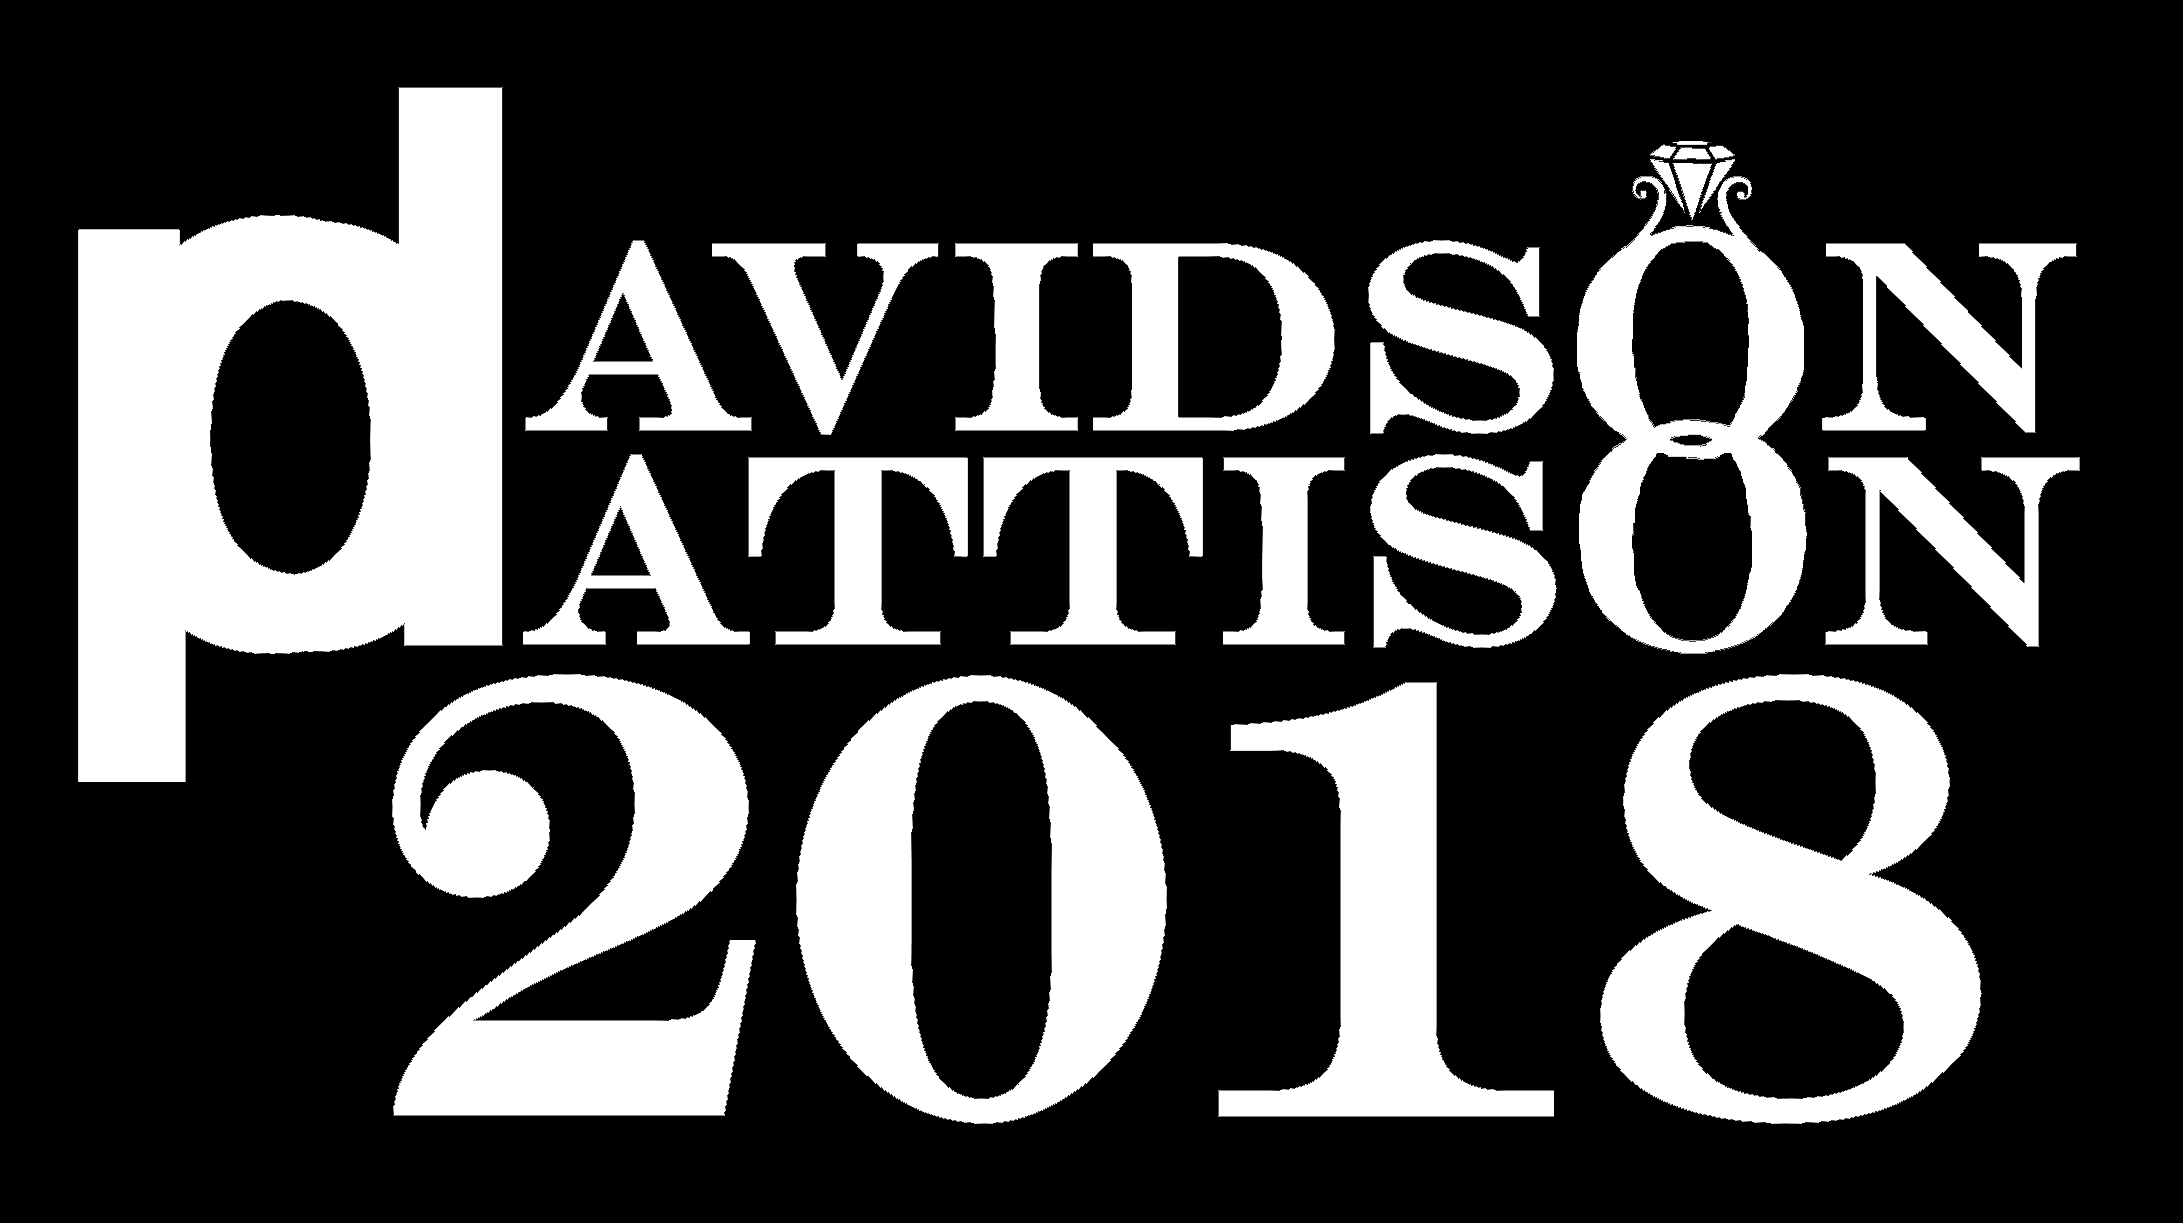 Wedding | Davidson-Pattison 2018